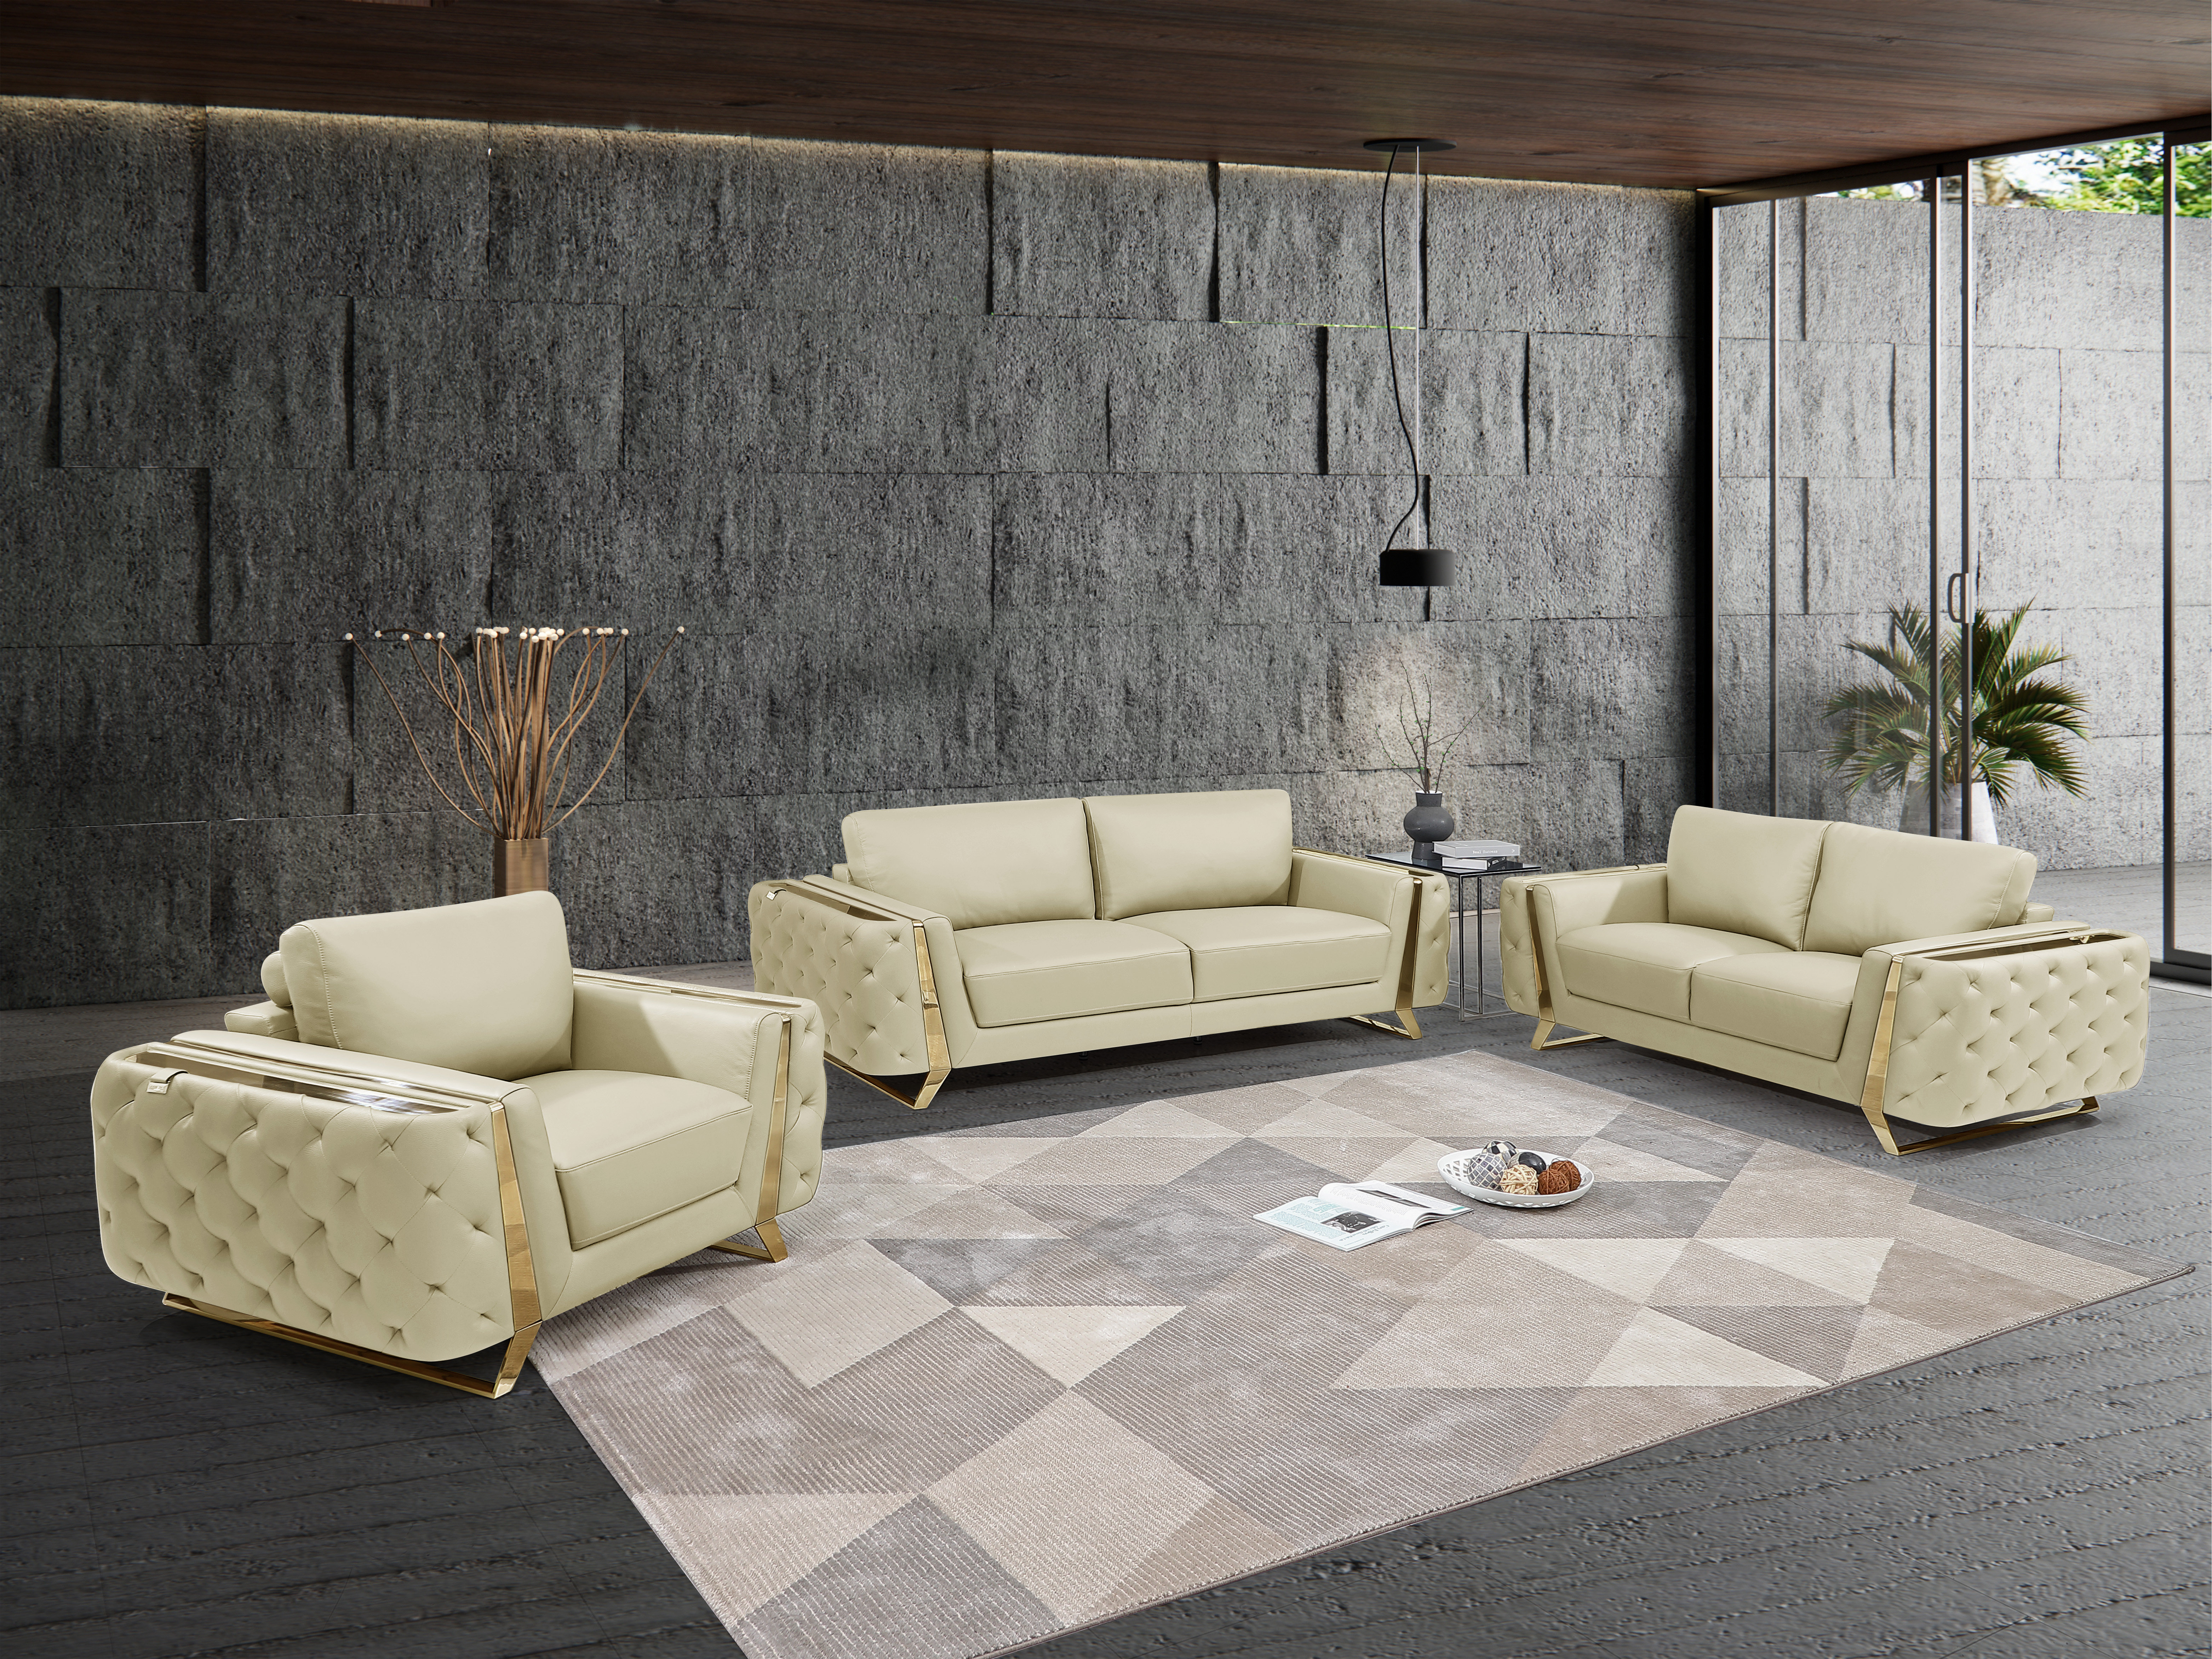 new classic carving living room sofa| Alibaba.com